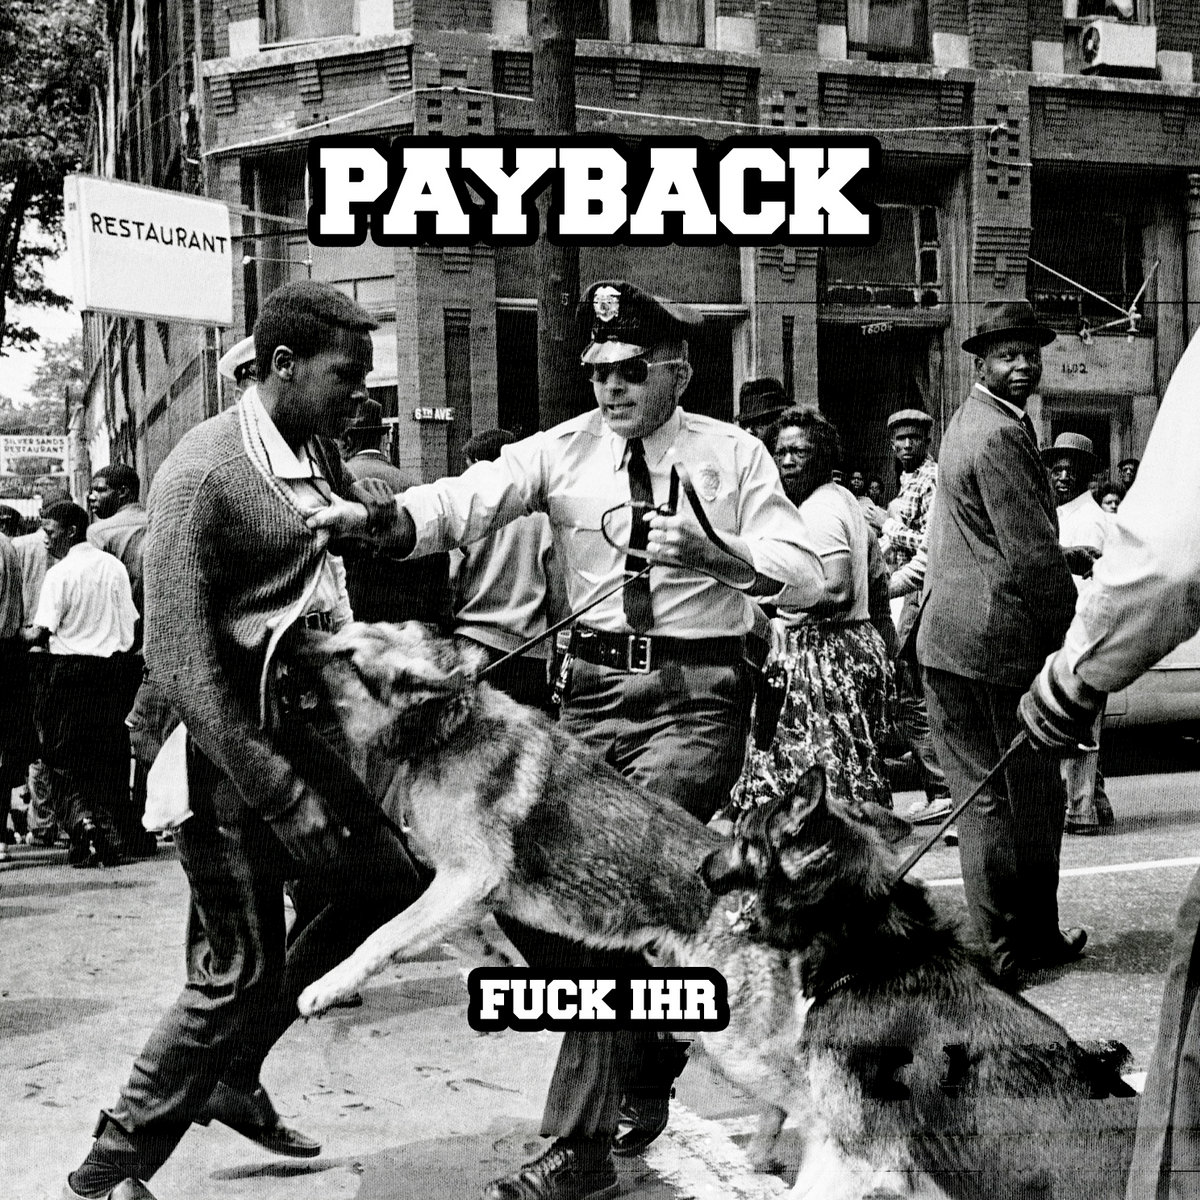 Payback Fuck